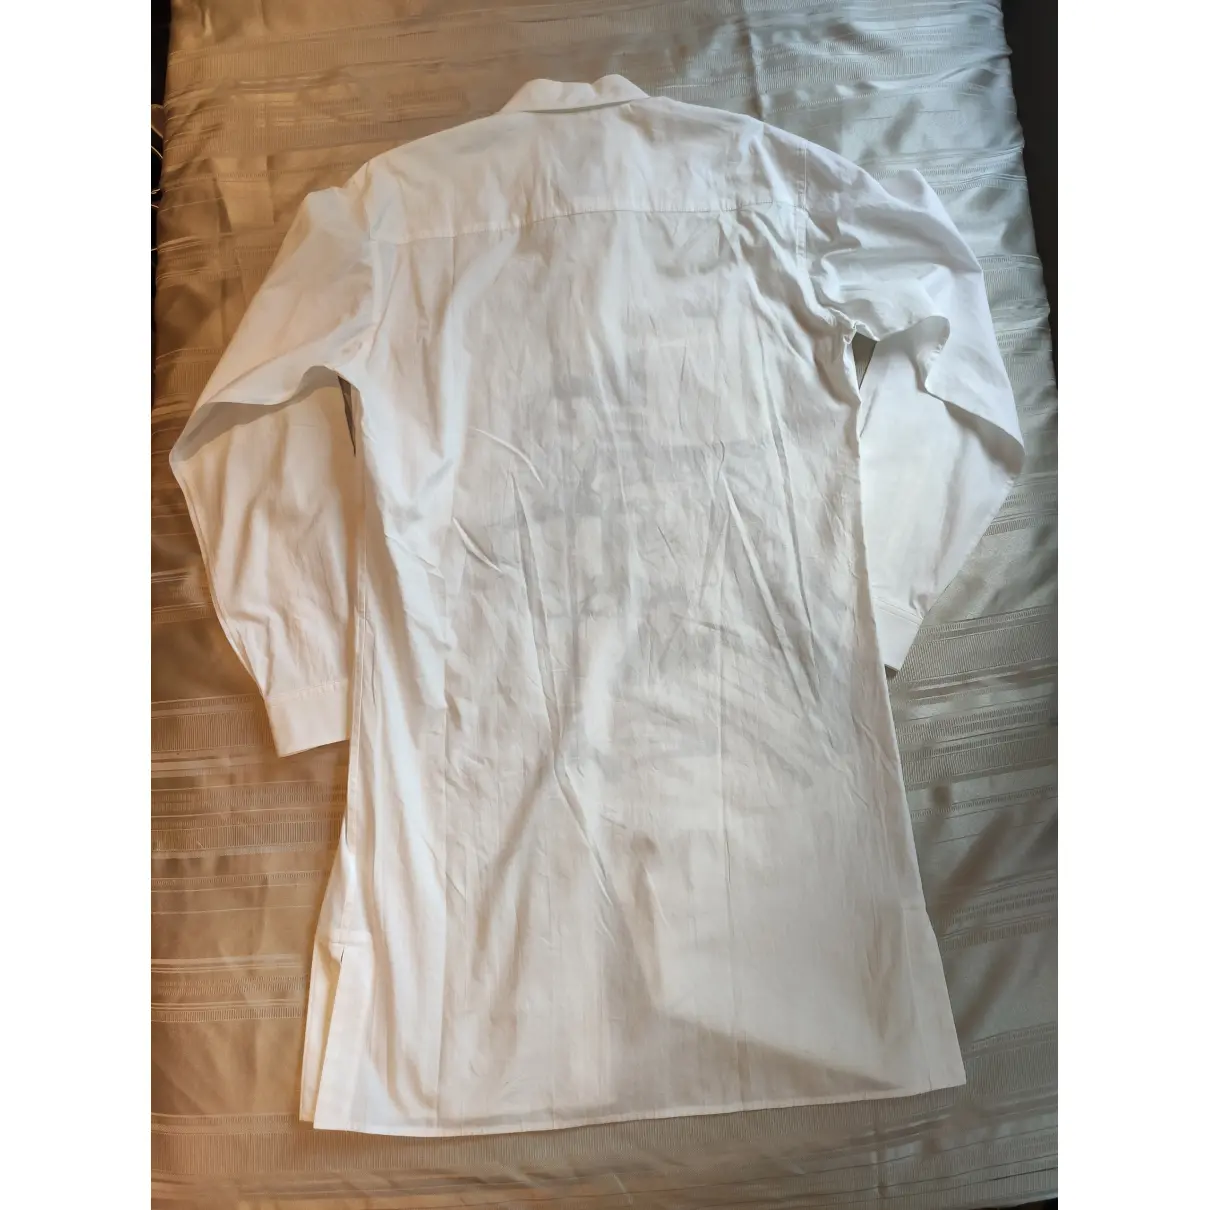 Buy Yohji Yamamoto Shirt online